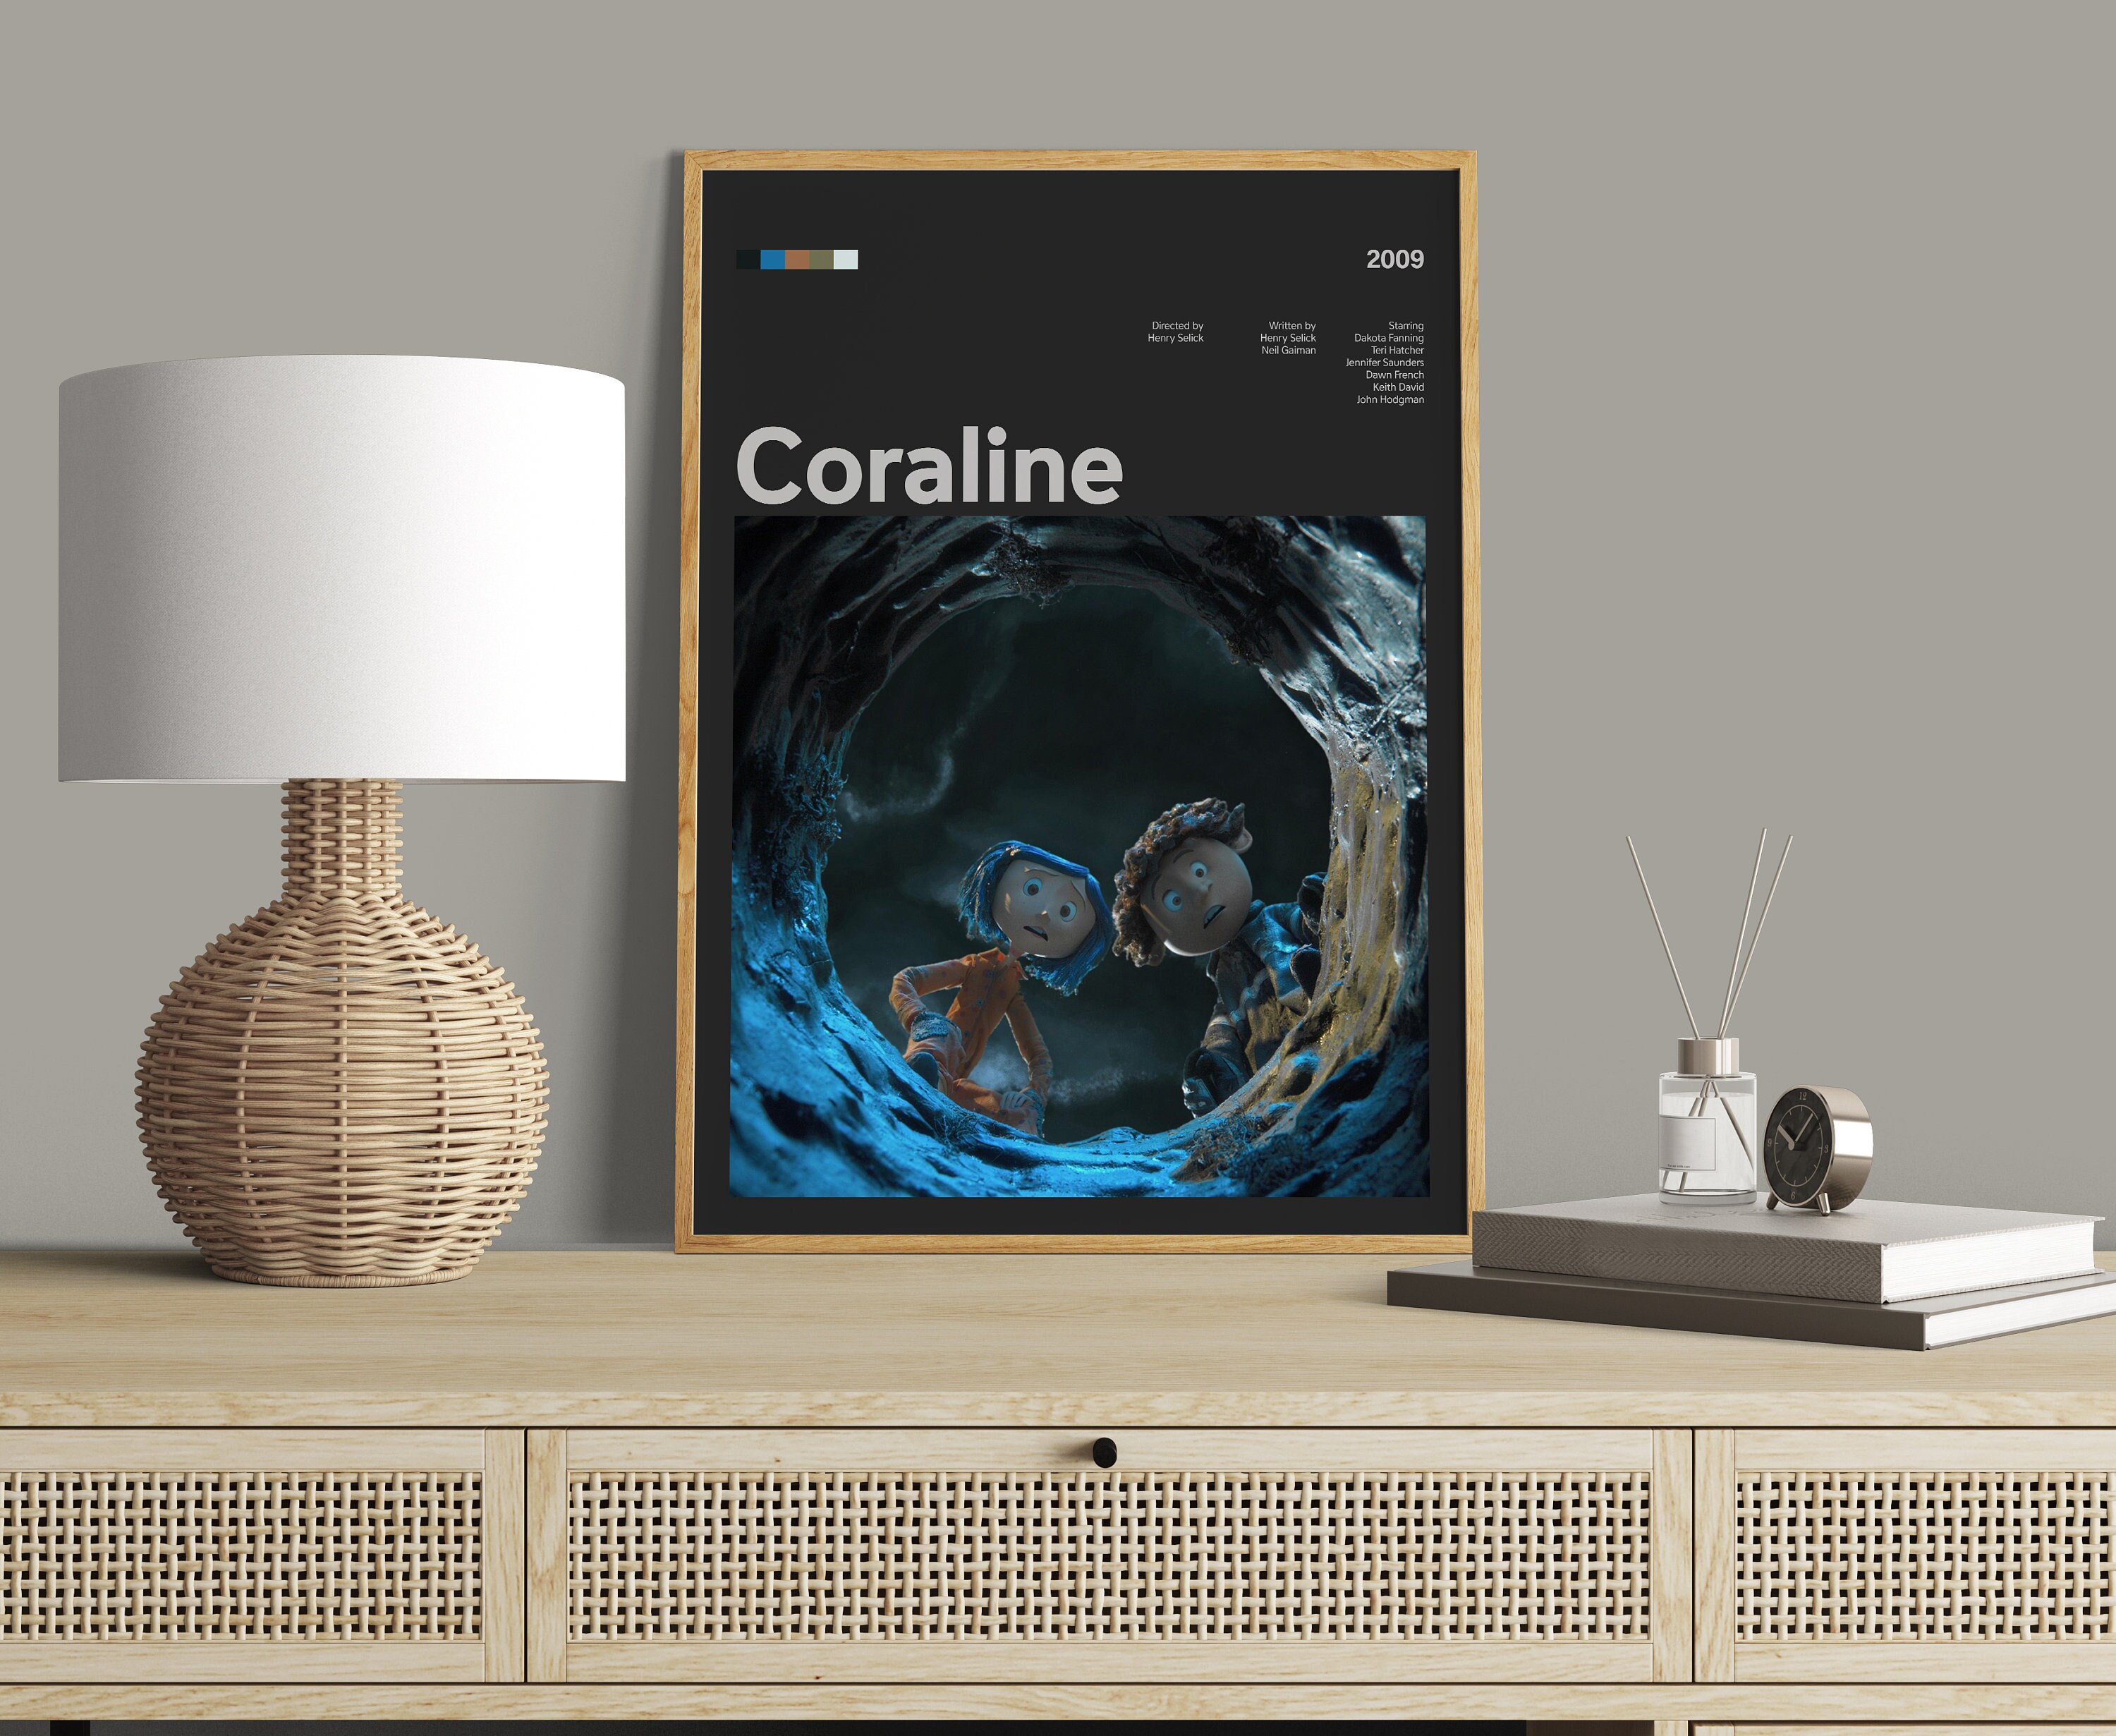 Coraline azevedo